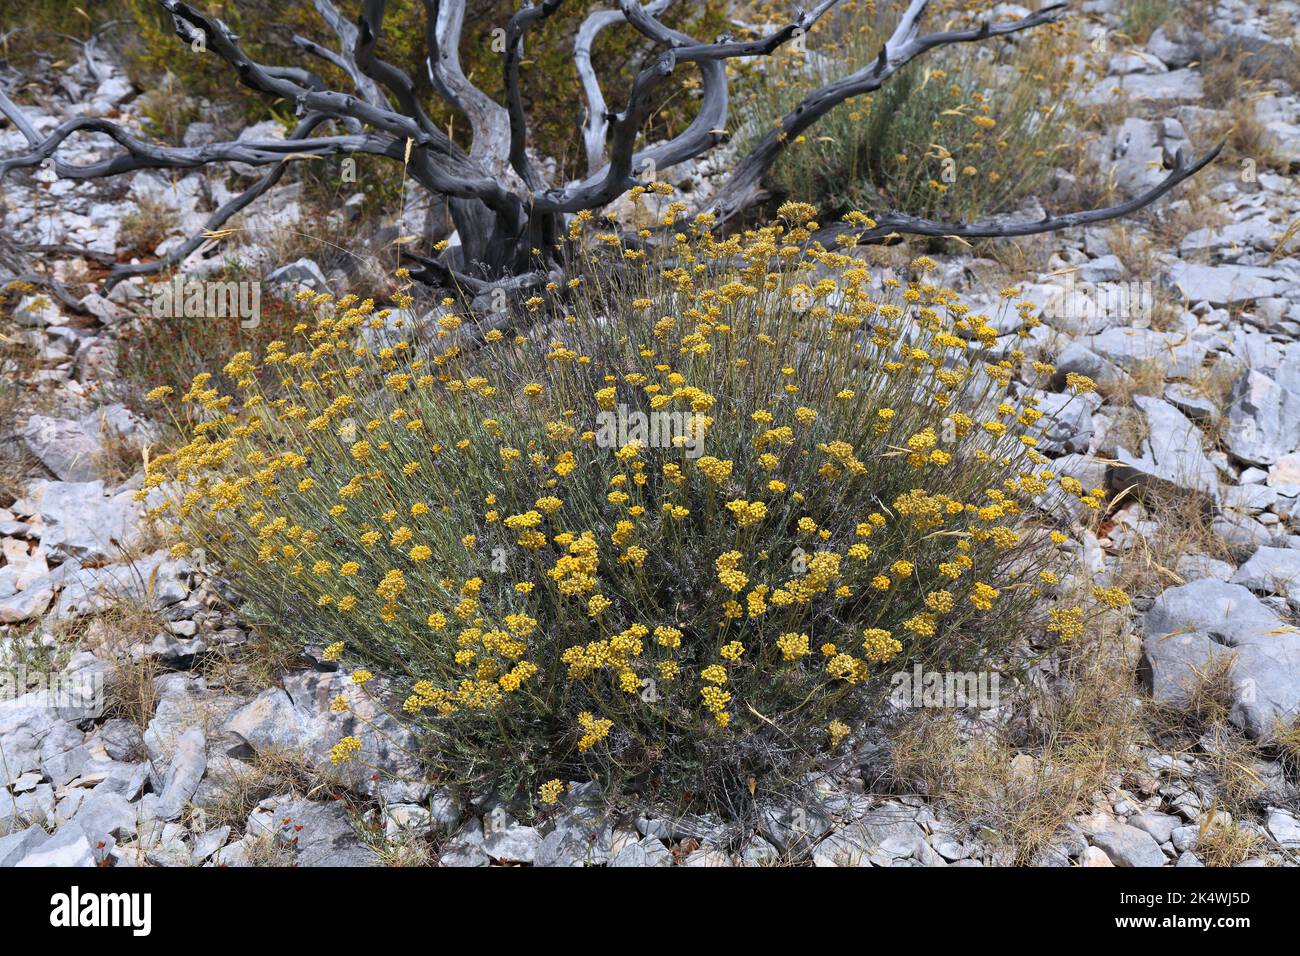 Croatia Zirje island nature in summer. Mediterranean plant species: flowers of Helichrysum italicum (curry plant). Stock Photo